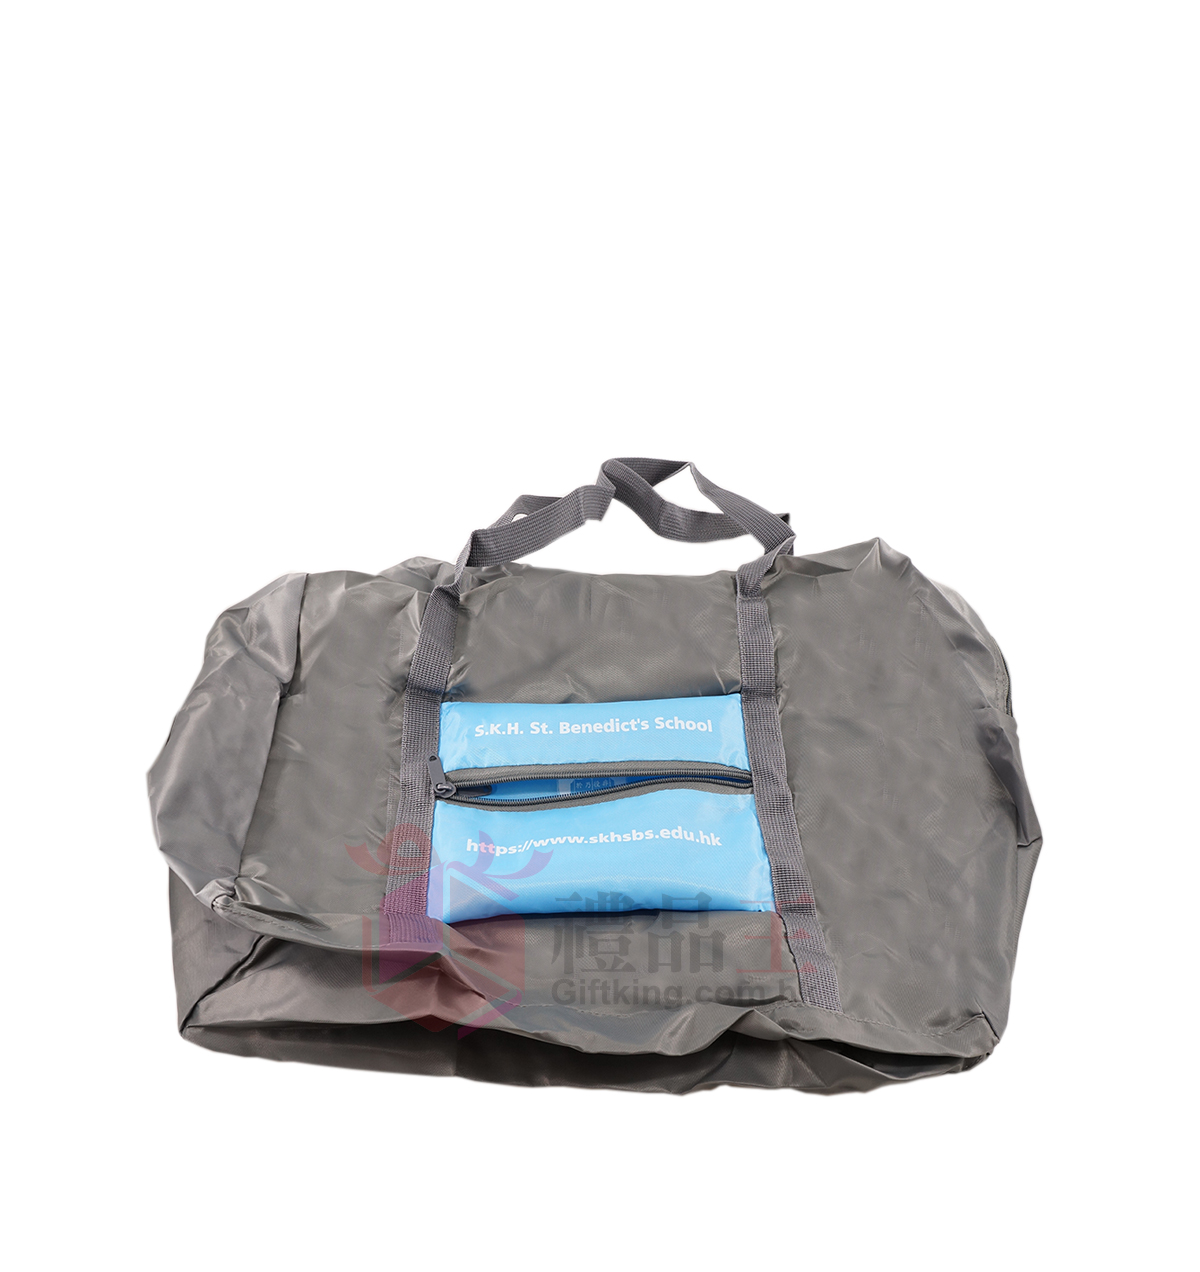 S.K.H St.Benedict's School Foldable Shopping Bag